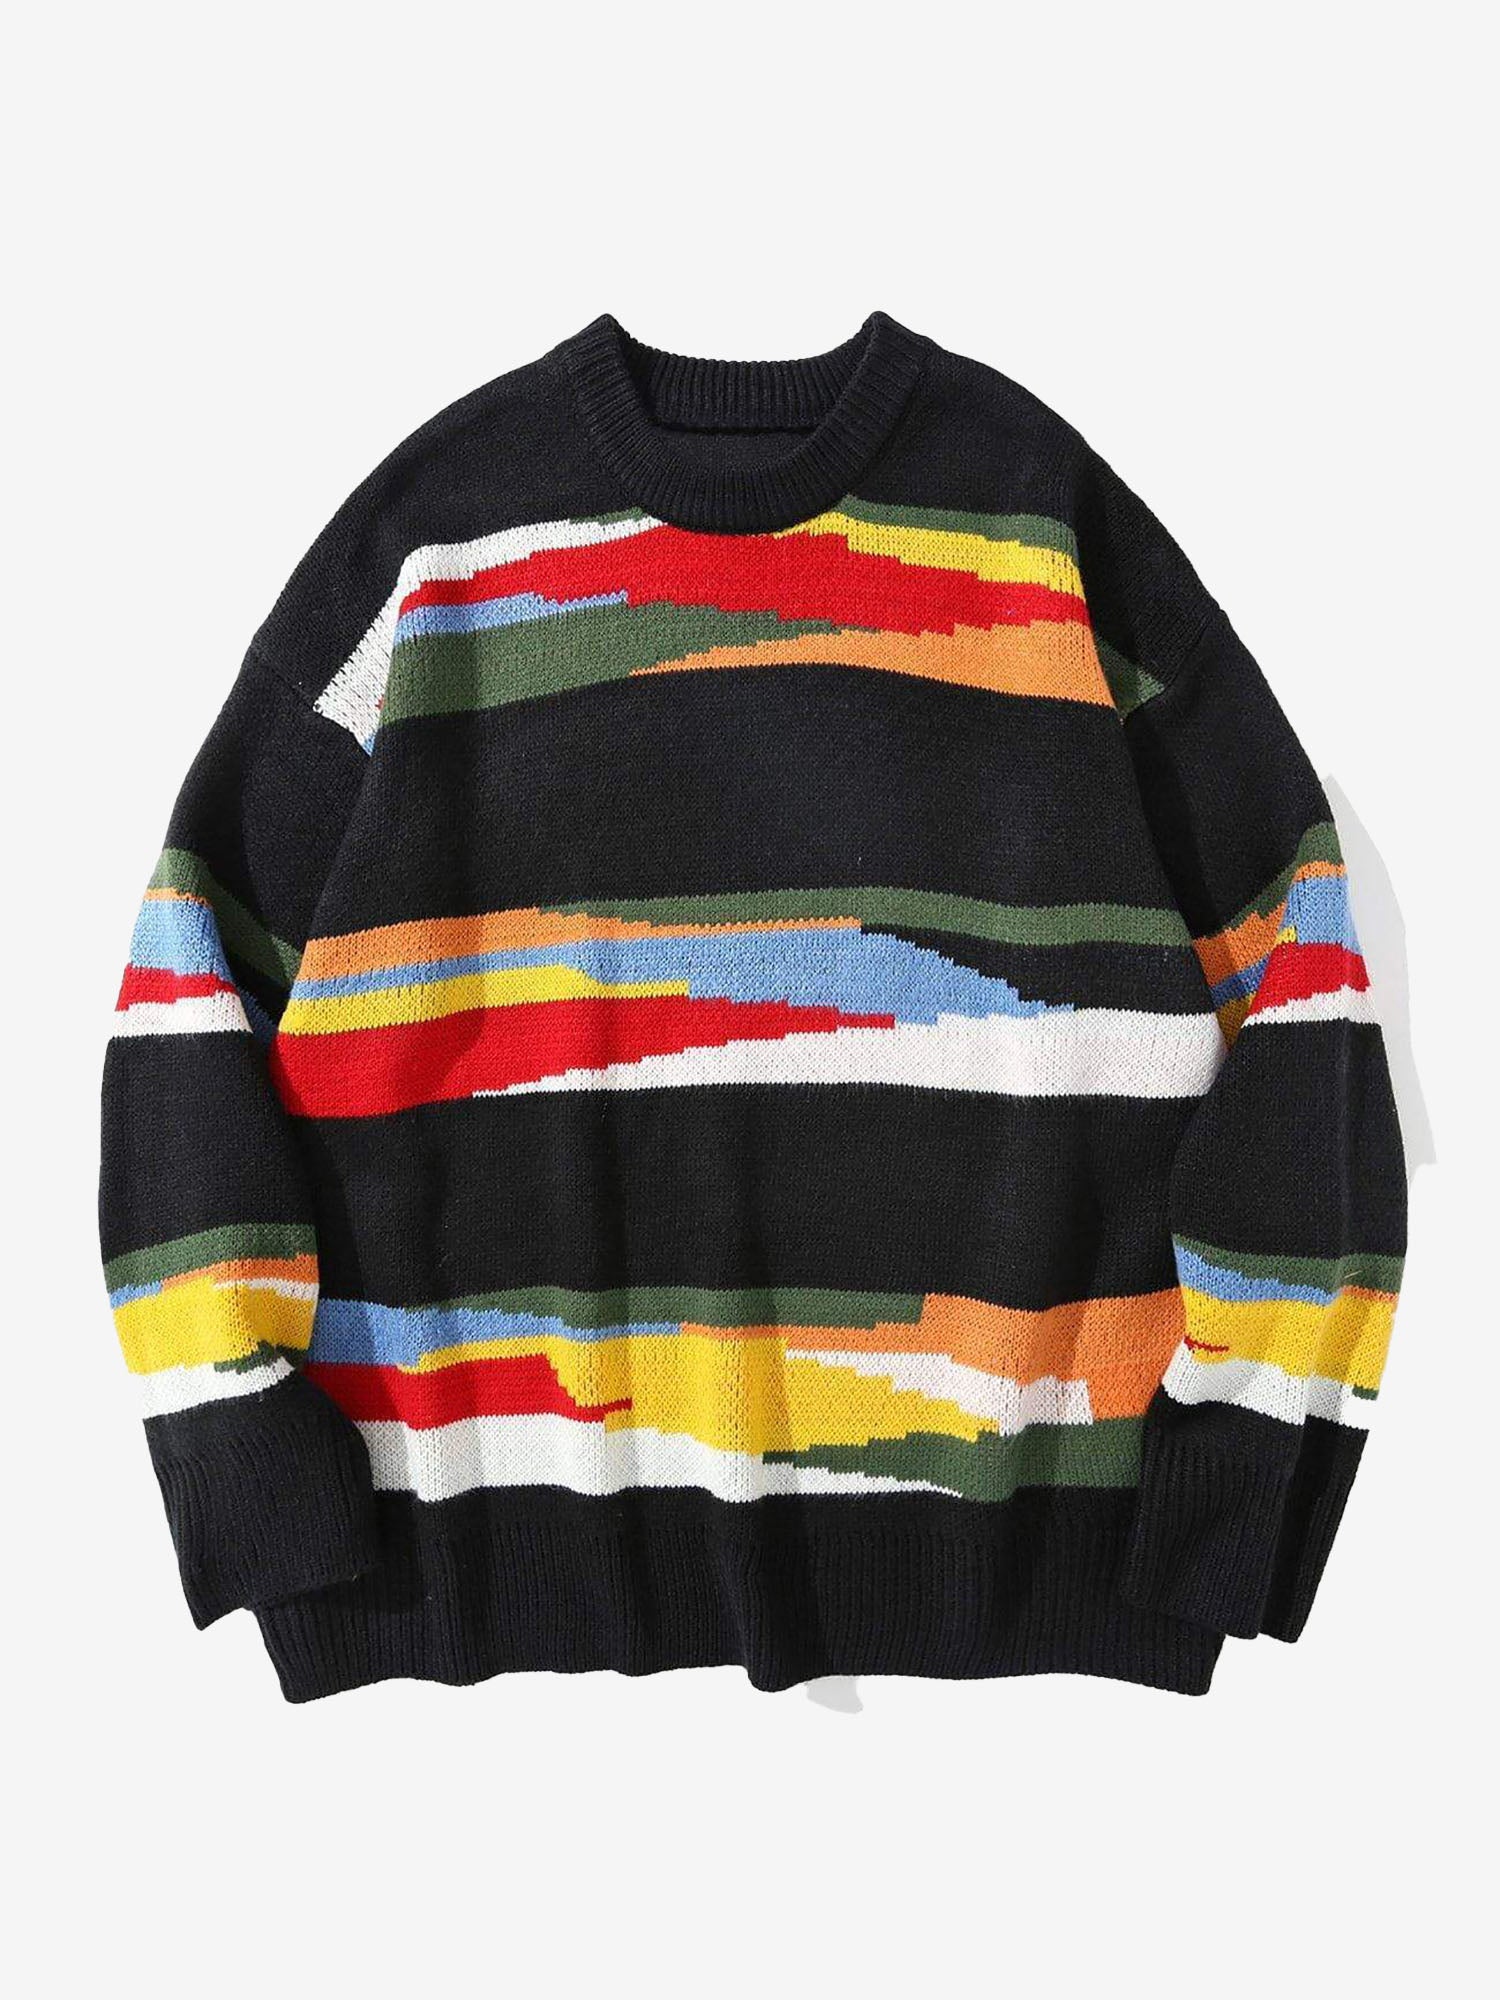 Black Irregular Striped Knitted Sweater for men's